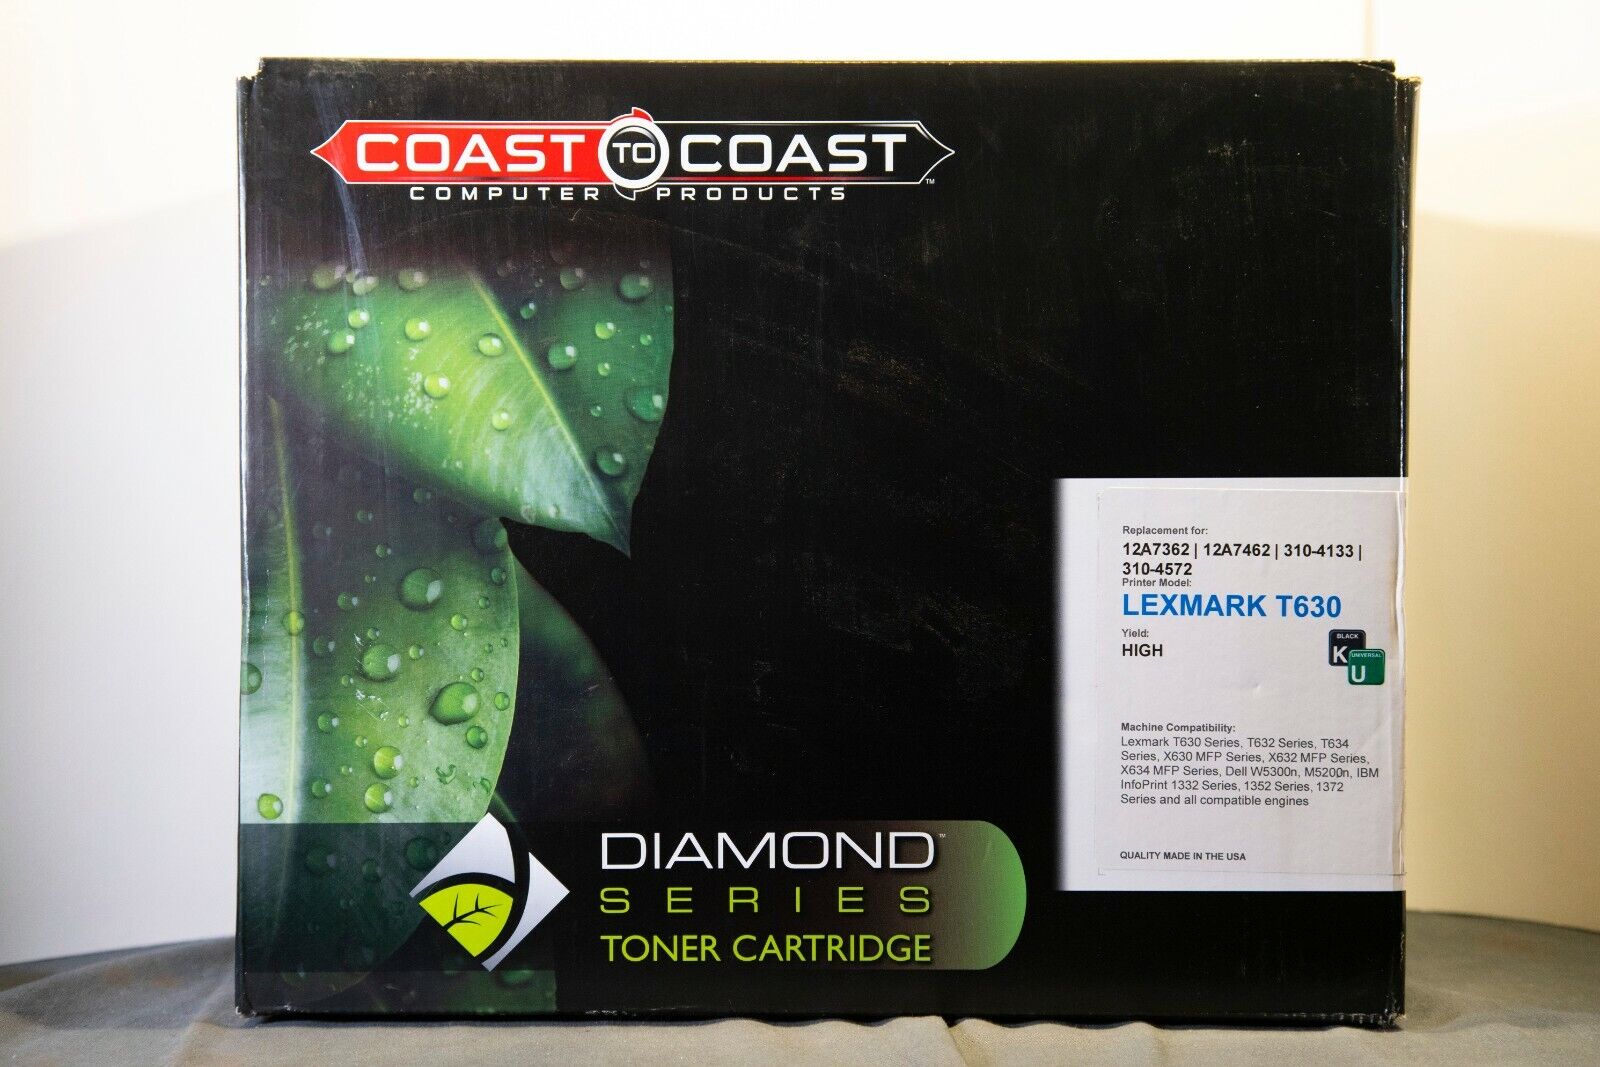 Lexmark T630 High Yield Black Toner Cartridge, Diamond Series Cartridge SEALED